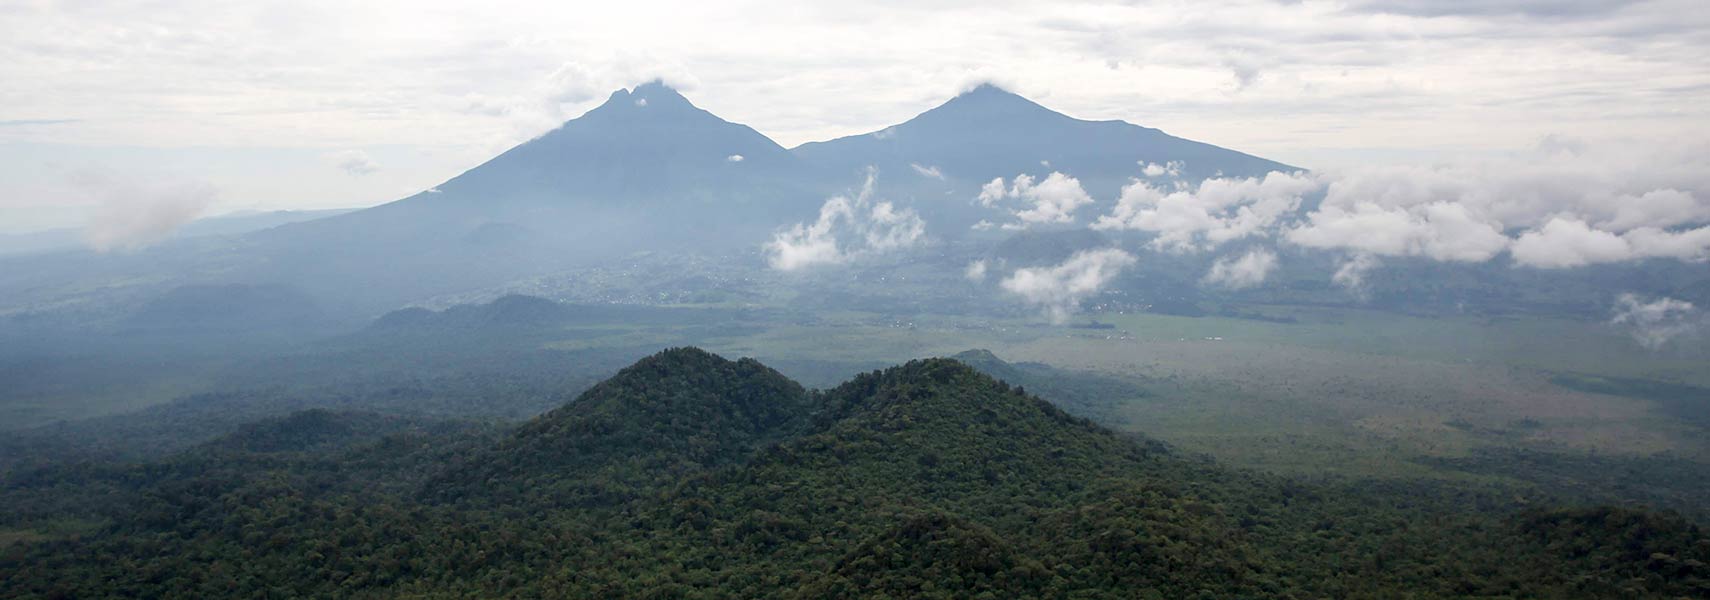 Mount Mikeno (DR Congo) and Mount Karisimbi, Rwanda's highest mountain